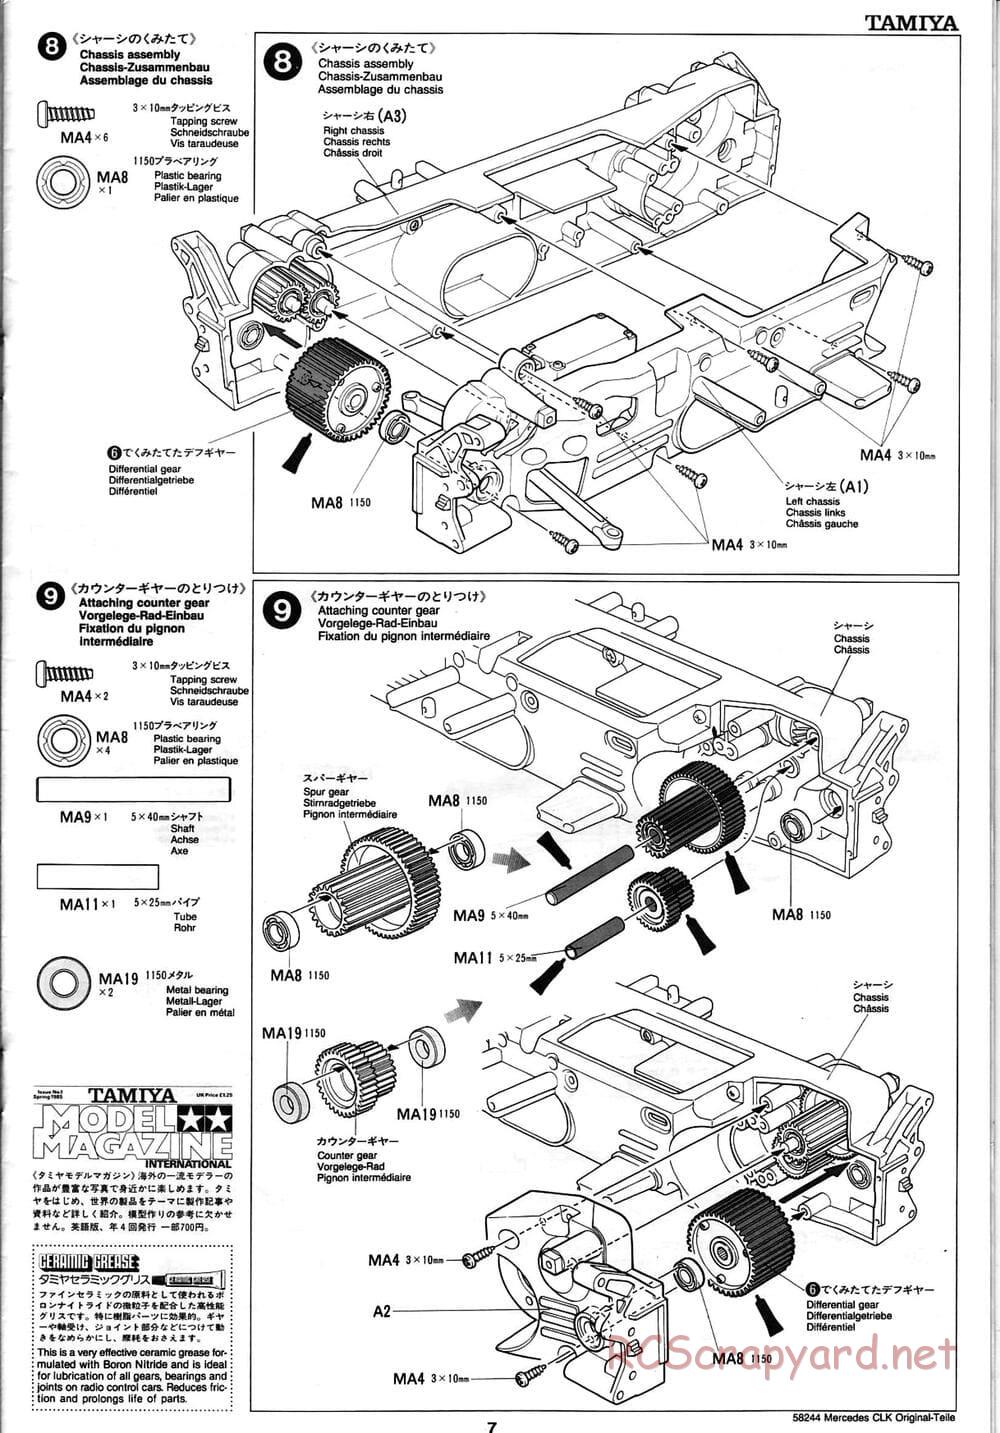 Tamiya - Mercedes CLK-GTR Original-Teile - TL-01 Chassis - Manual - Page 7